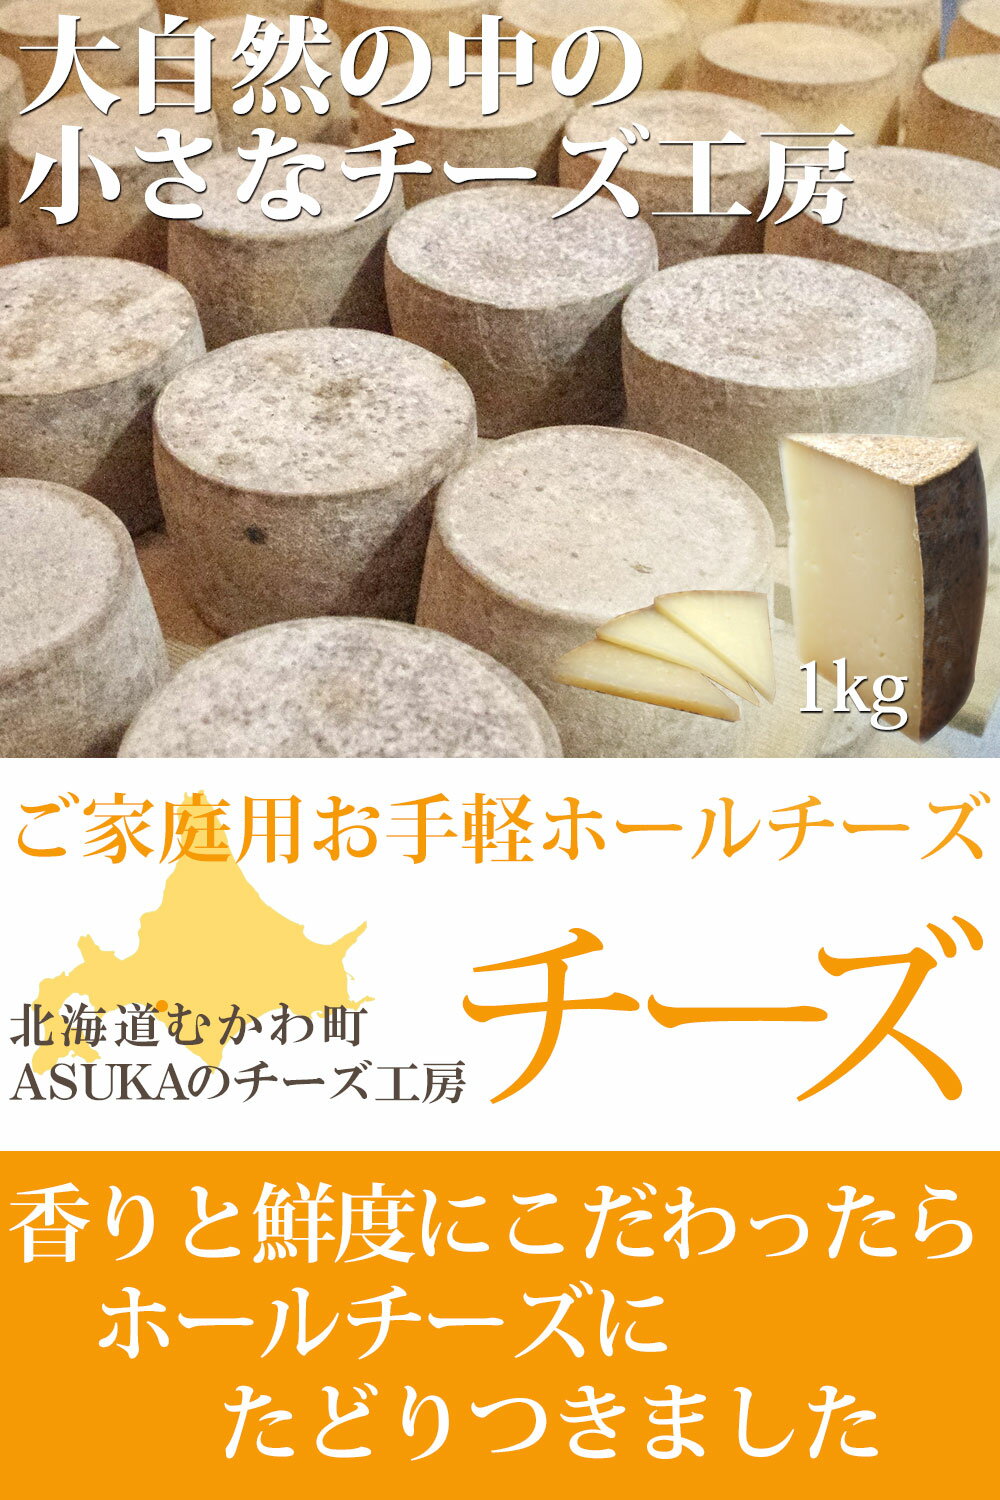 ASUKAのチーズ工房 ホールチーズ 約1kg...の紹介画像3